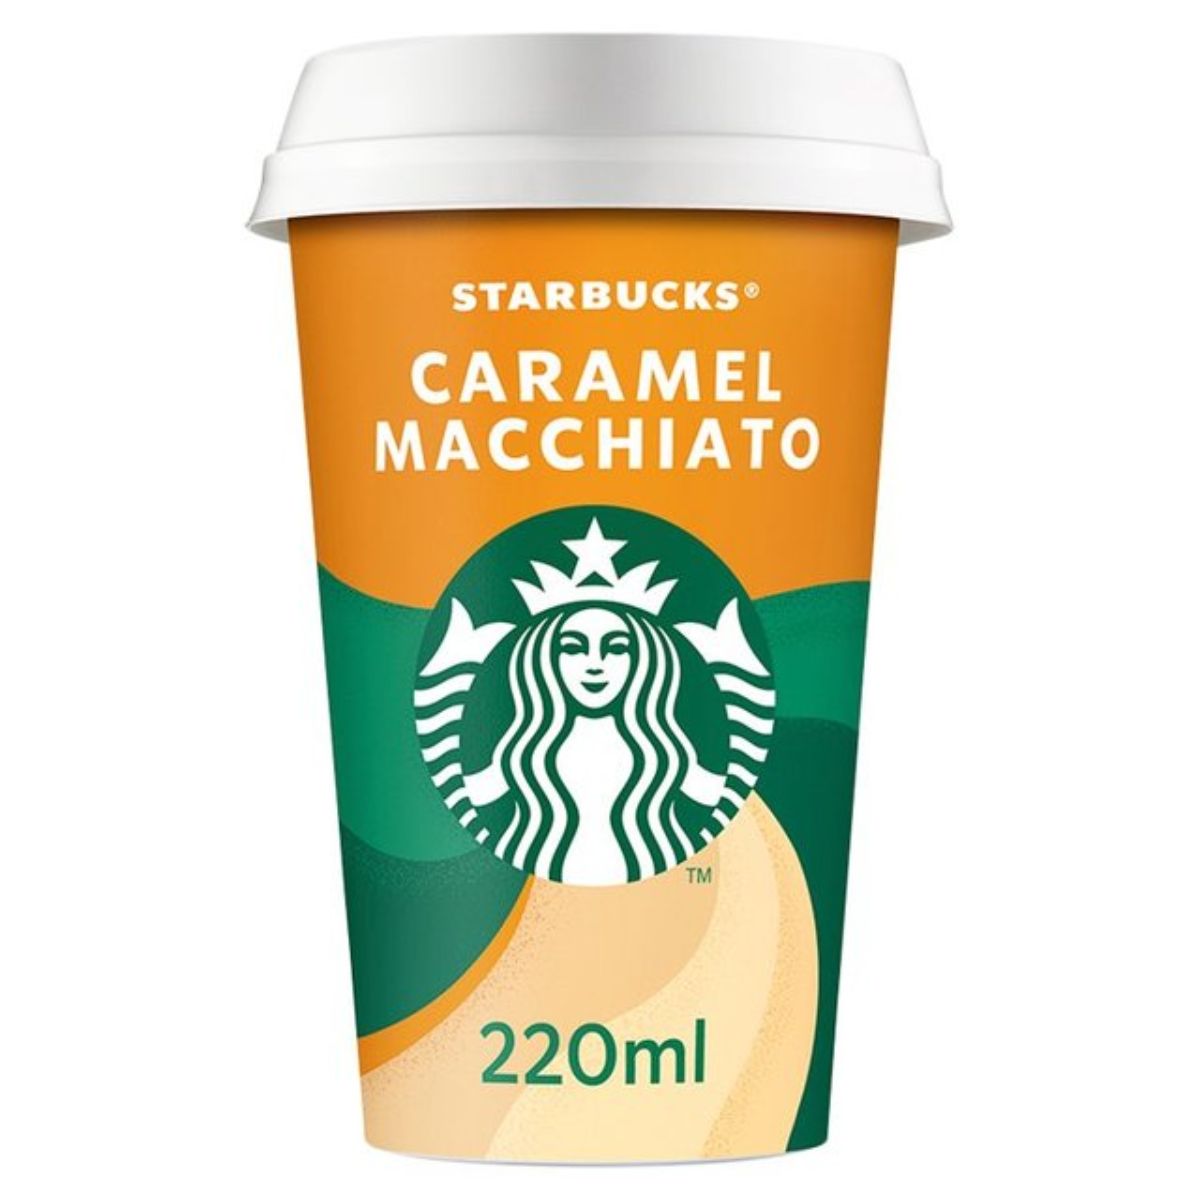 Starbucks - Caramel Macchiato Flavour - 220 ml - 200ml.